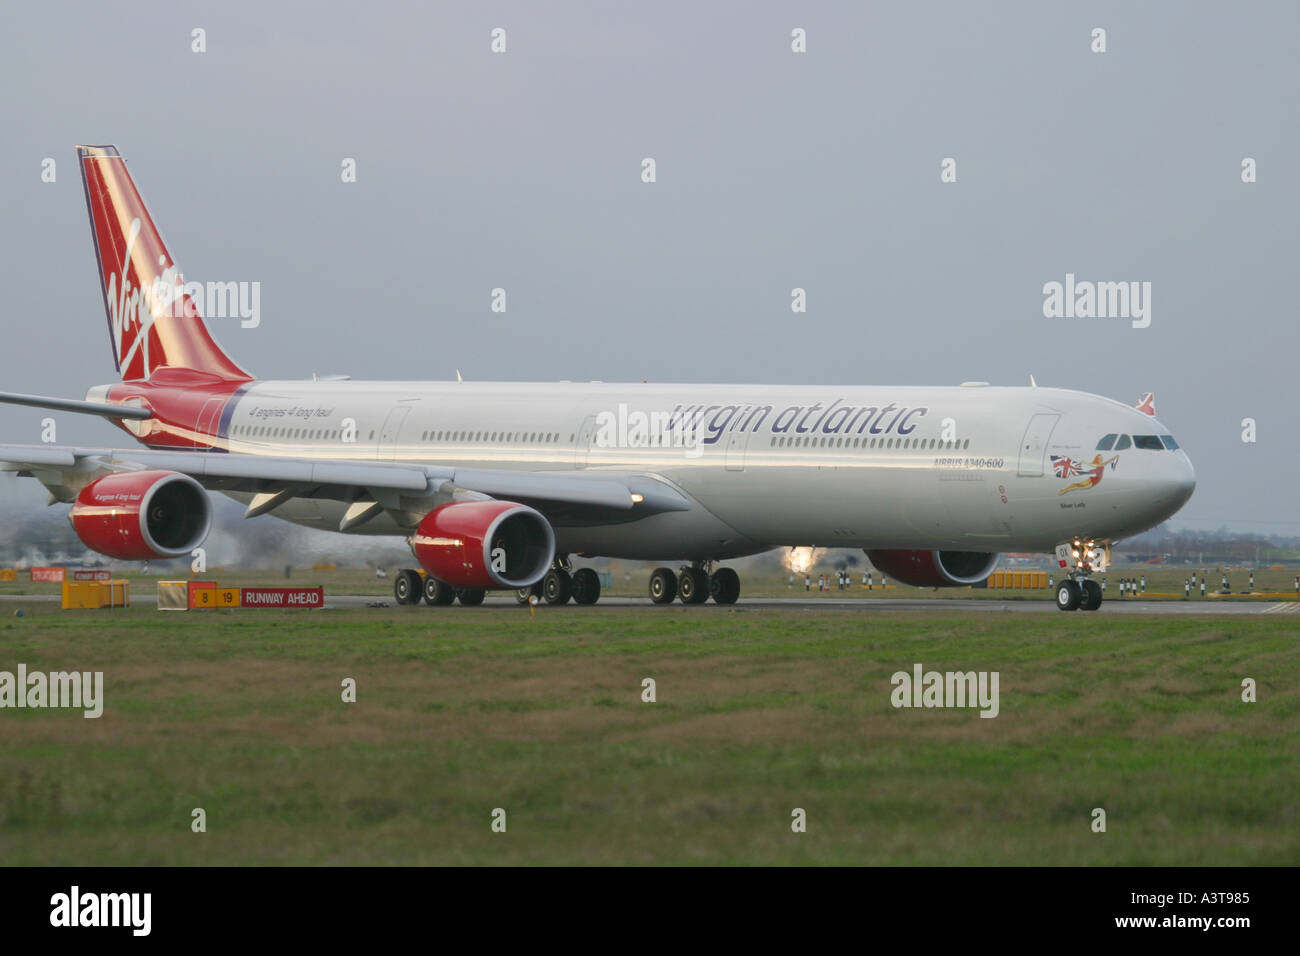 Commercial aircraft Airbus A340 642 Virgin Atlantic Airways preparing for departure at London Heathrow Airport Stock Photo